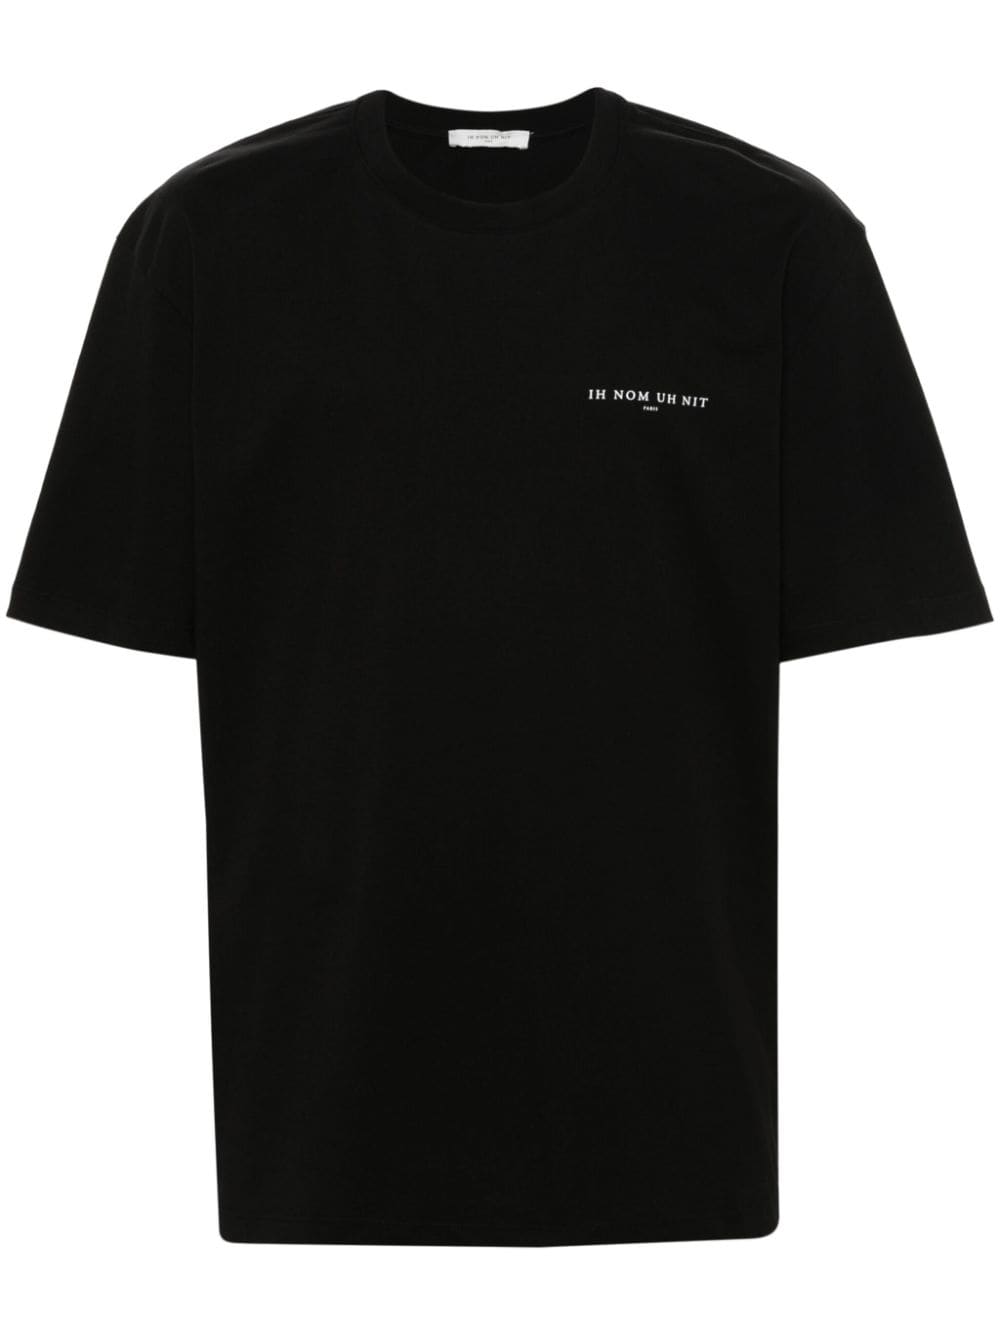 T-shirt nera con scritta logo